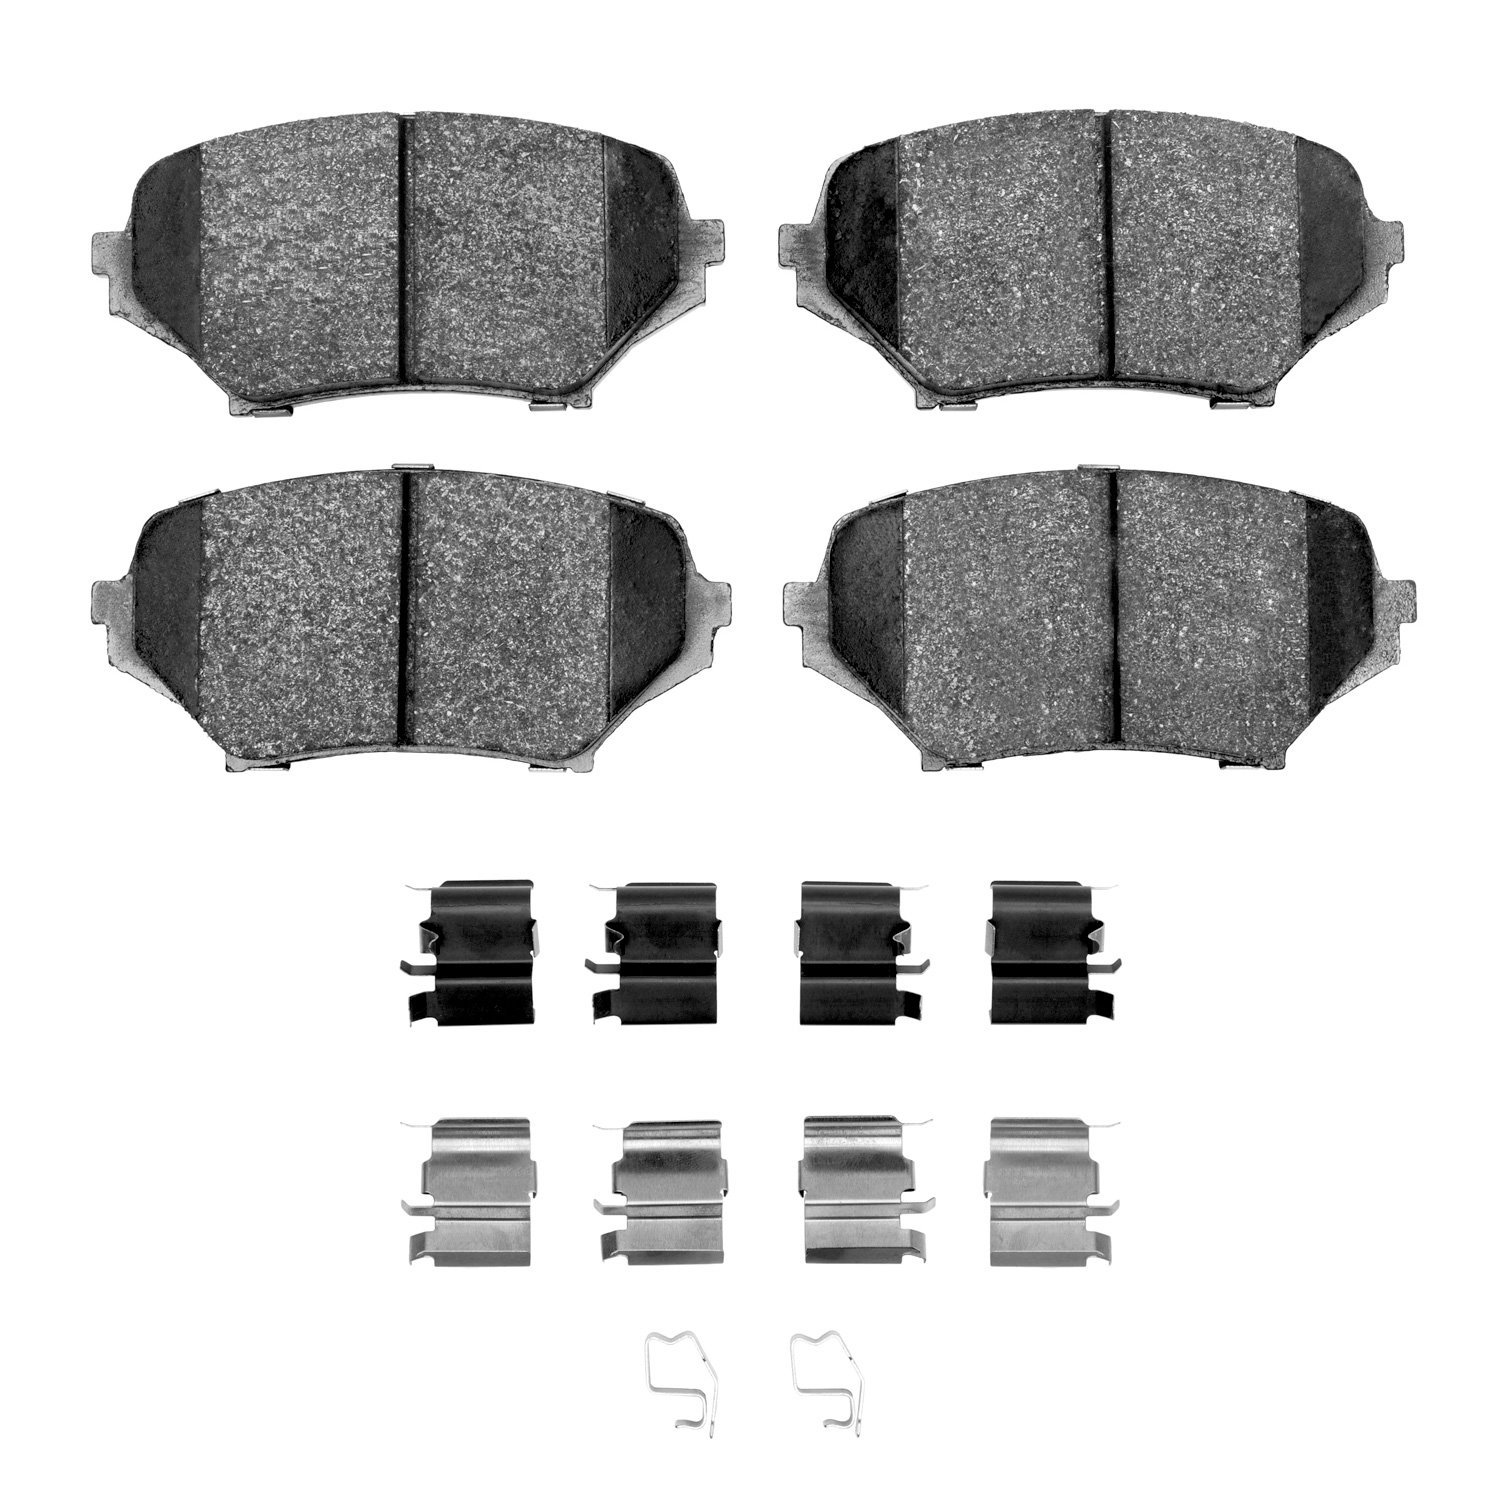 1551-1179-01 5000 Advanced Low-Metallic Brake Pads & Hardware Kit, 2006-2015 Ford/Lincoln/Mercury/Mazda, Position: Front